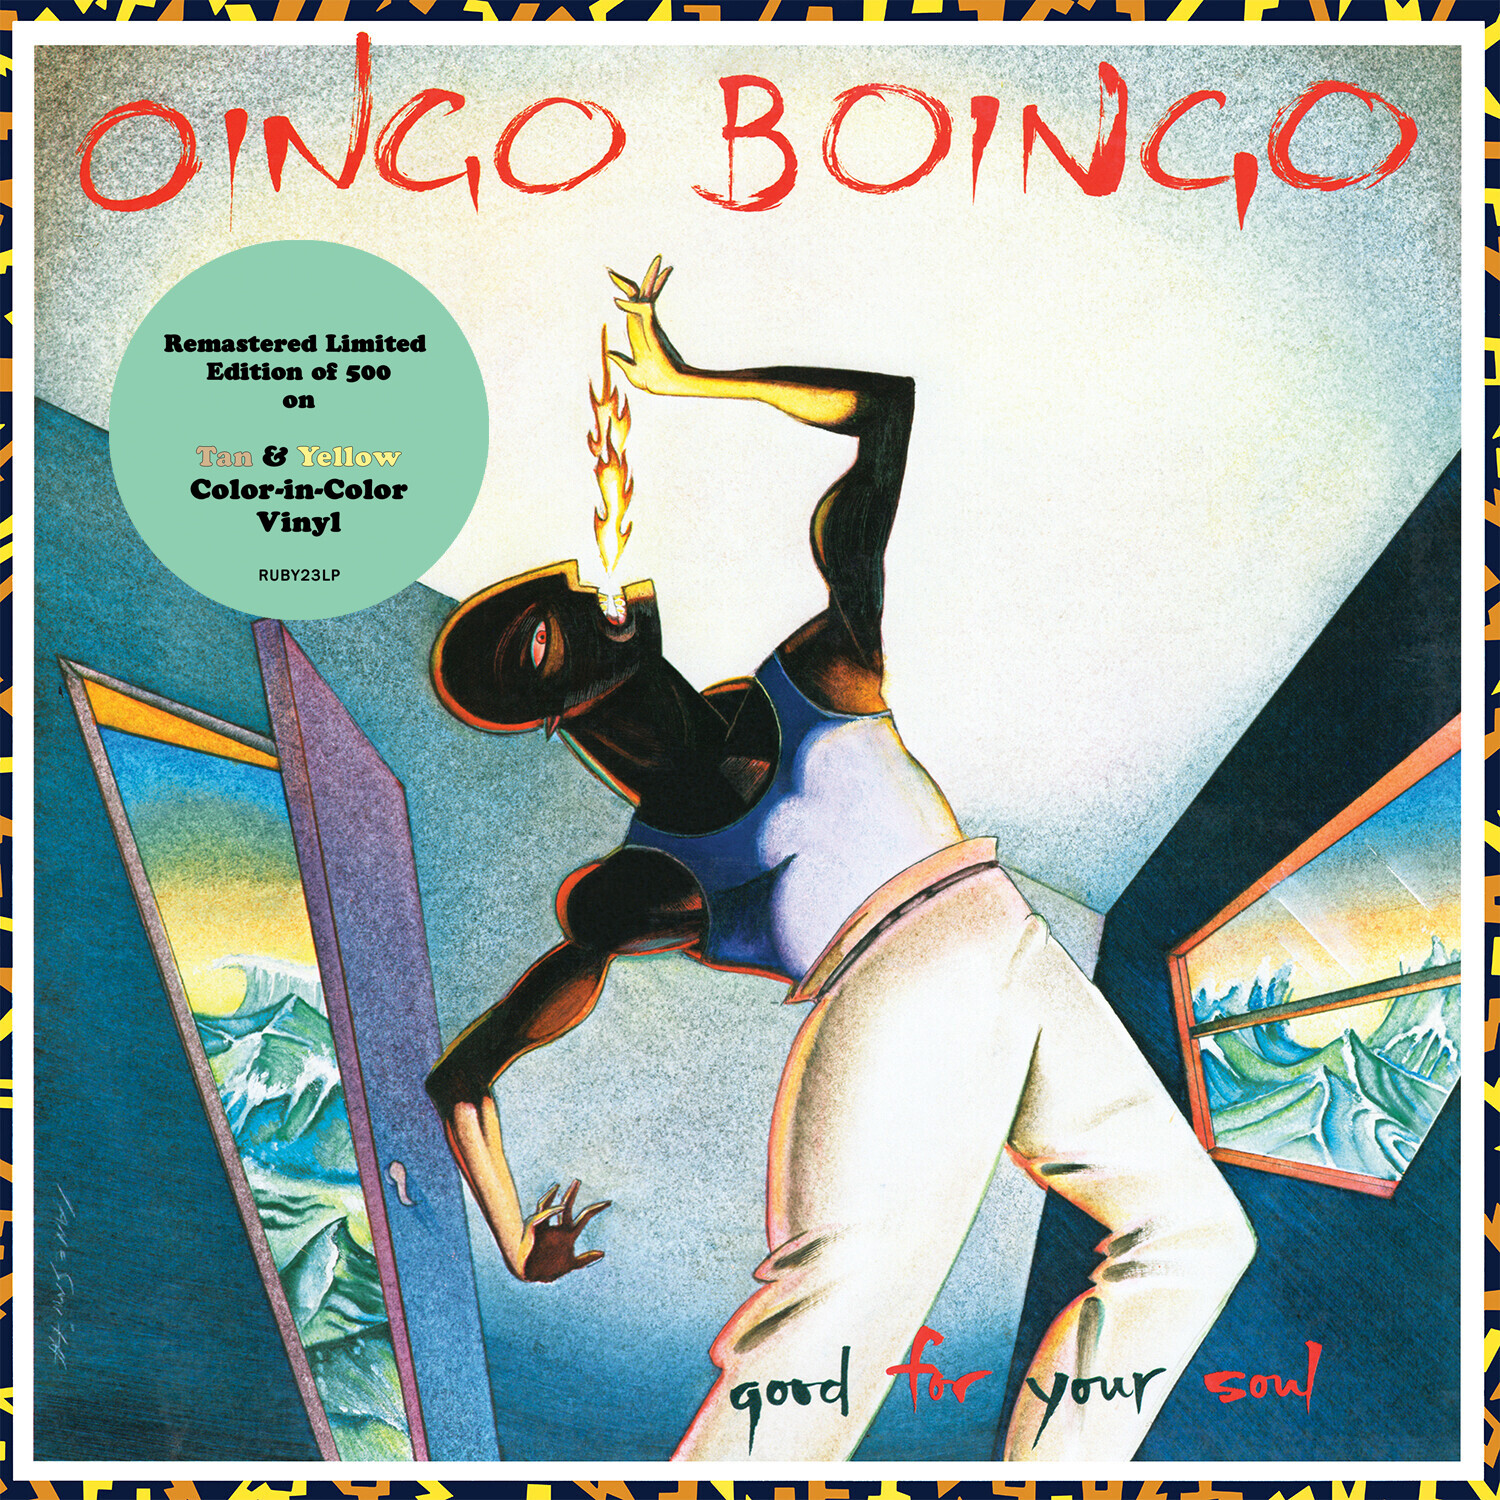 Oingo Boingo / Good For Your Soul LP: Tan & Yellow